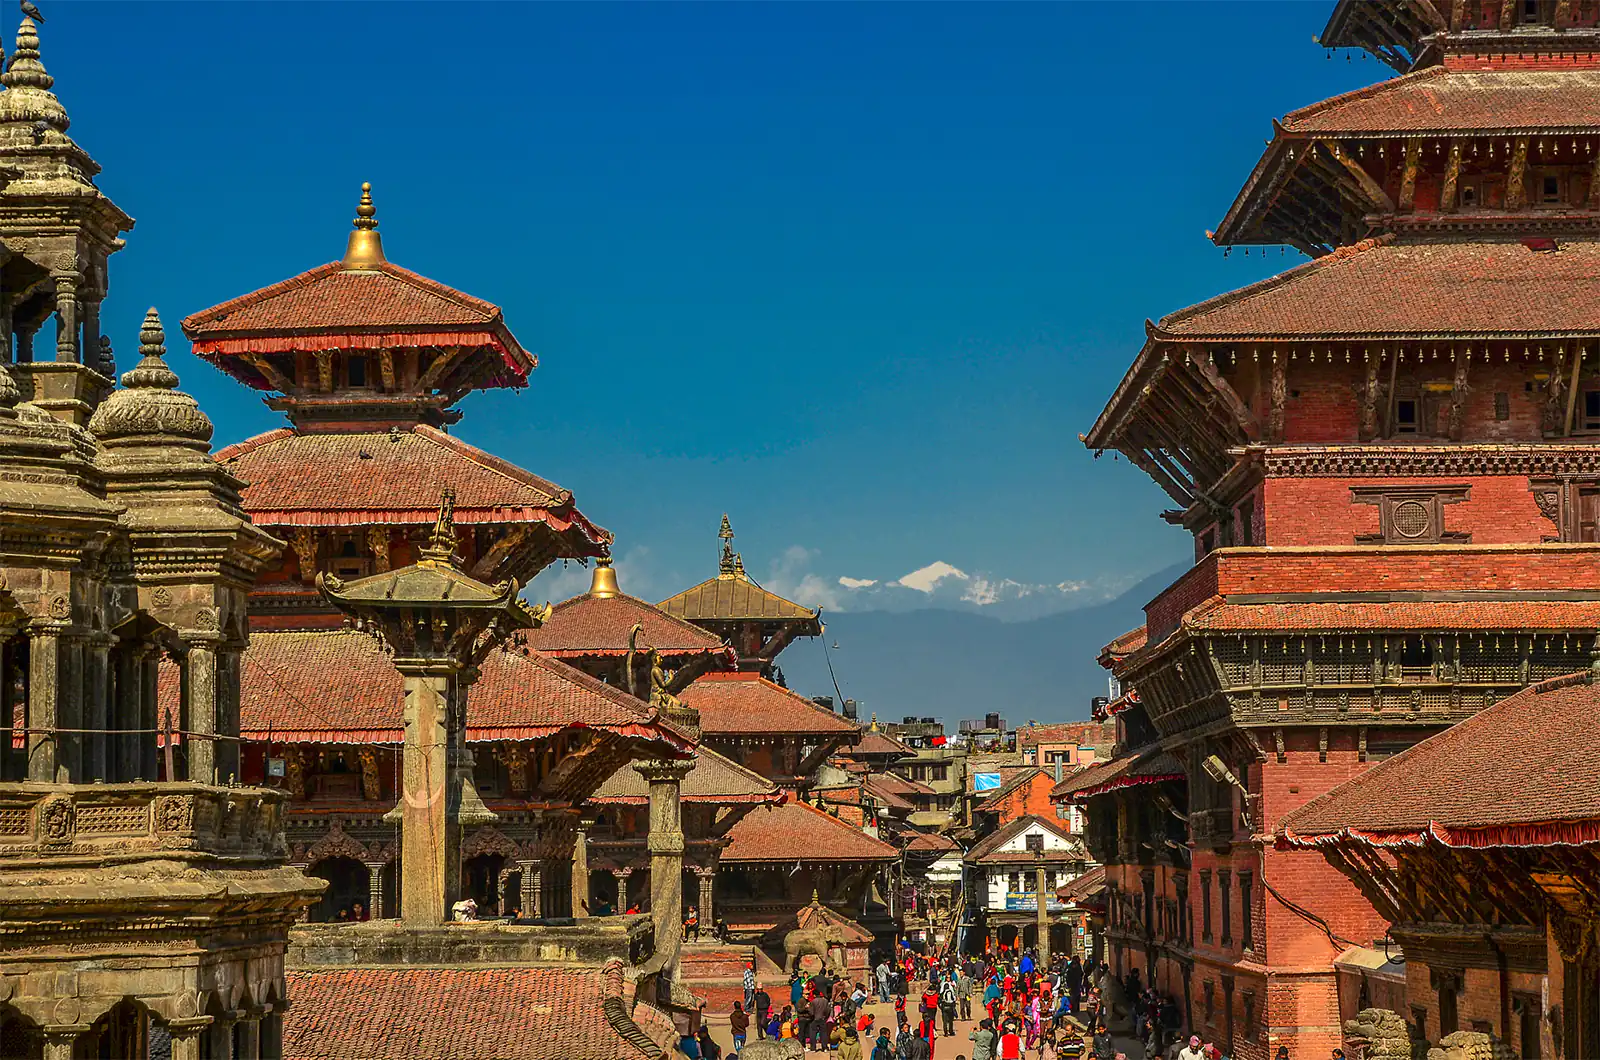 City of Temple - Patan Durbar Square